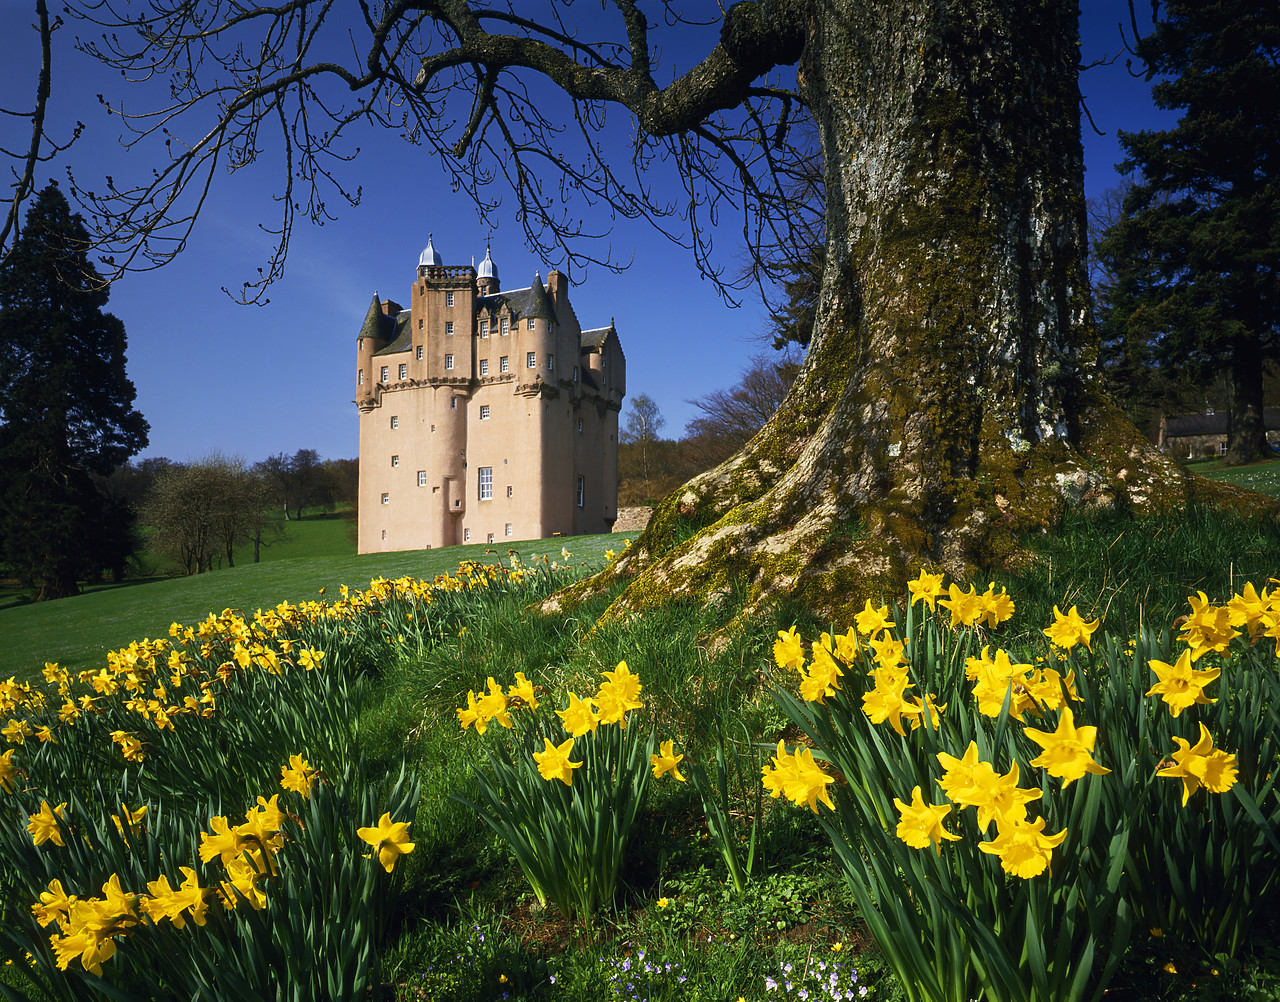 #934210-3 - Craigievar Castle in Spring, Near Alford, Grampian Region, Scotland